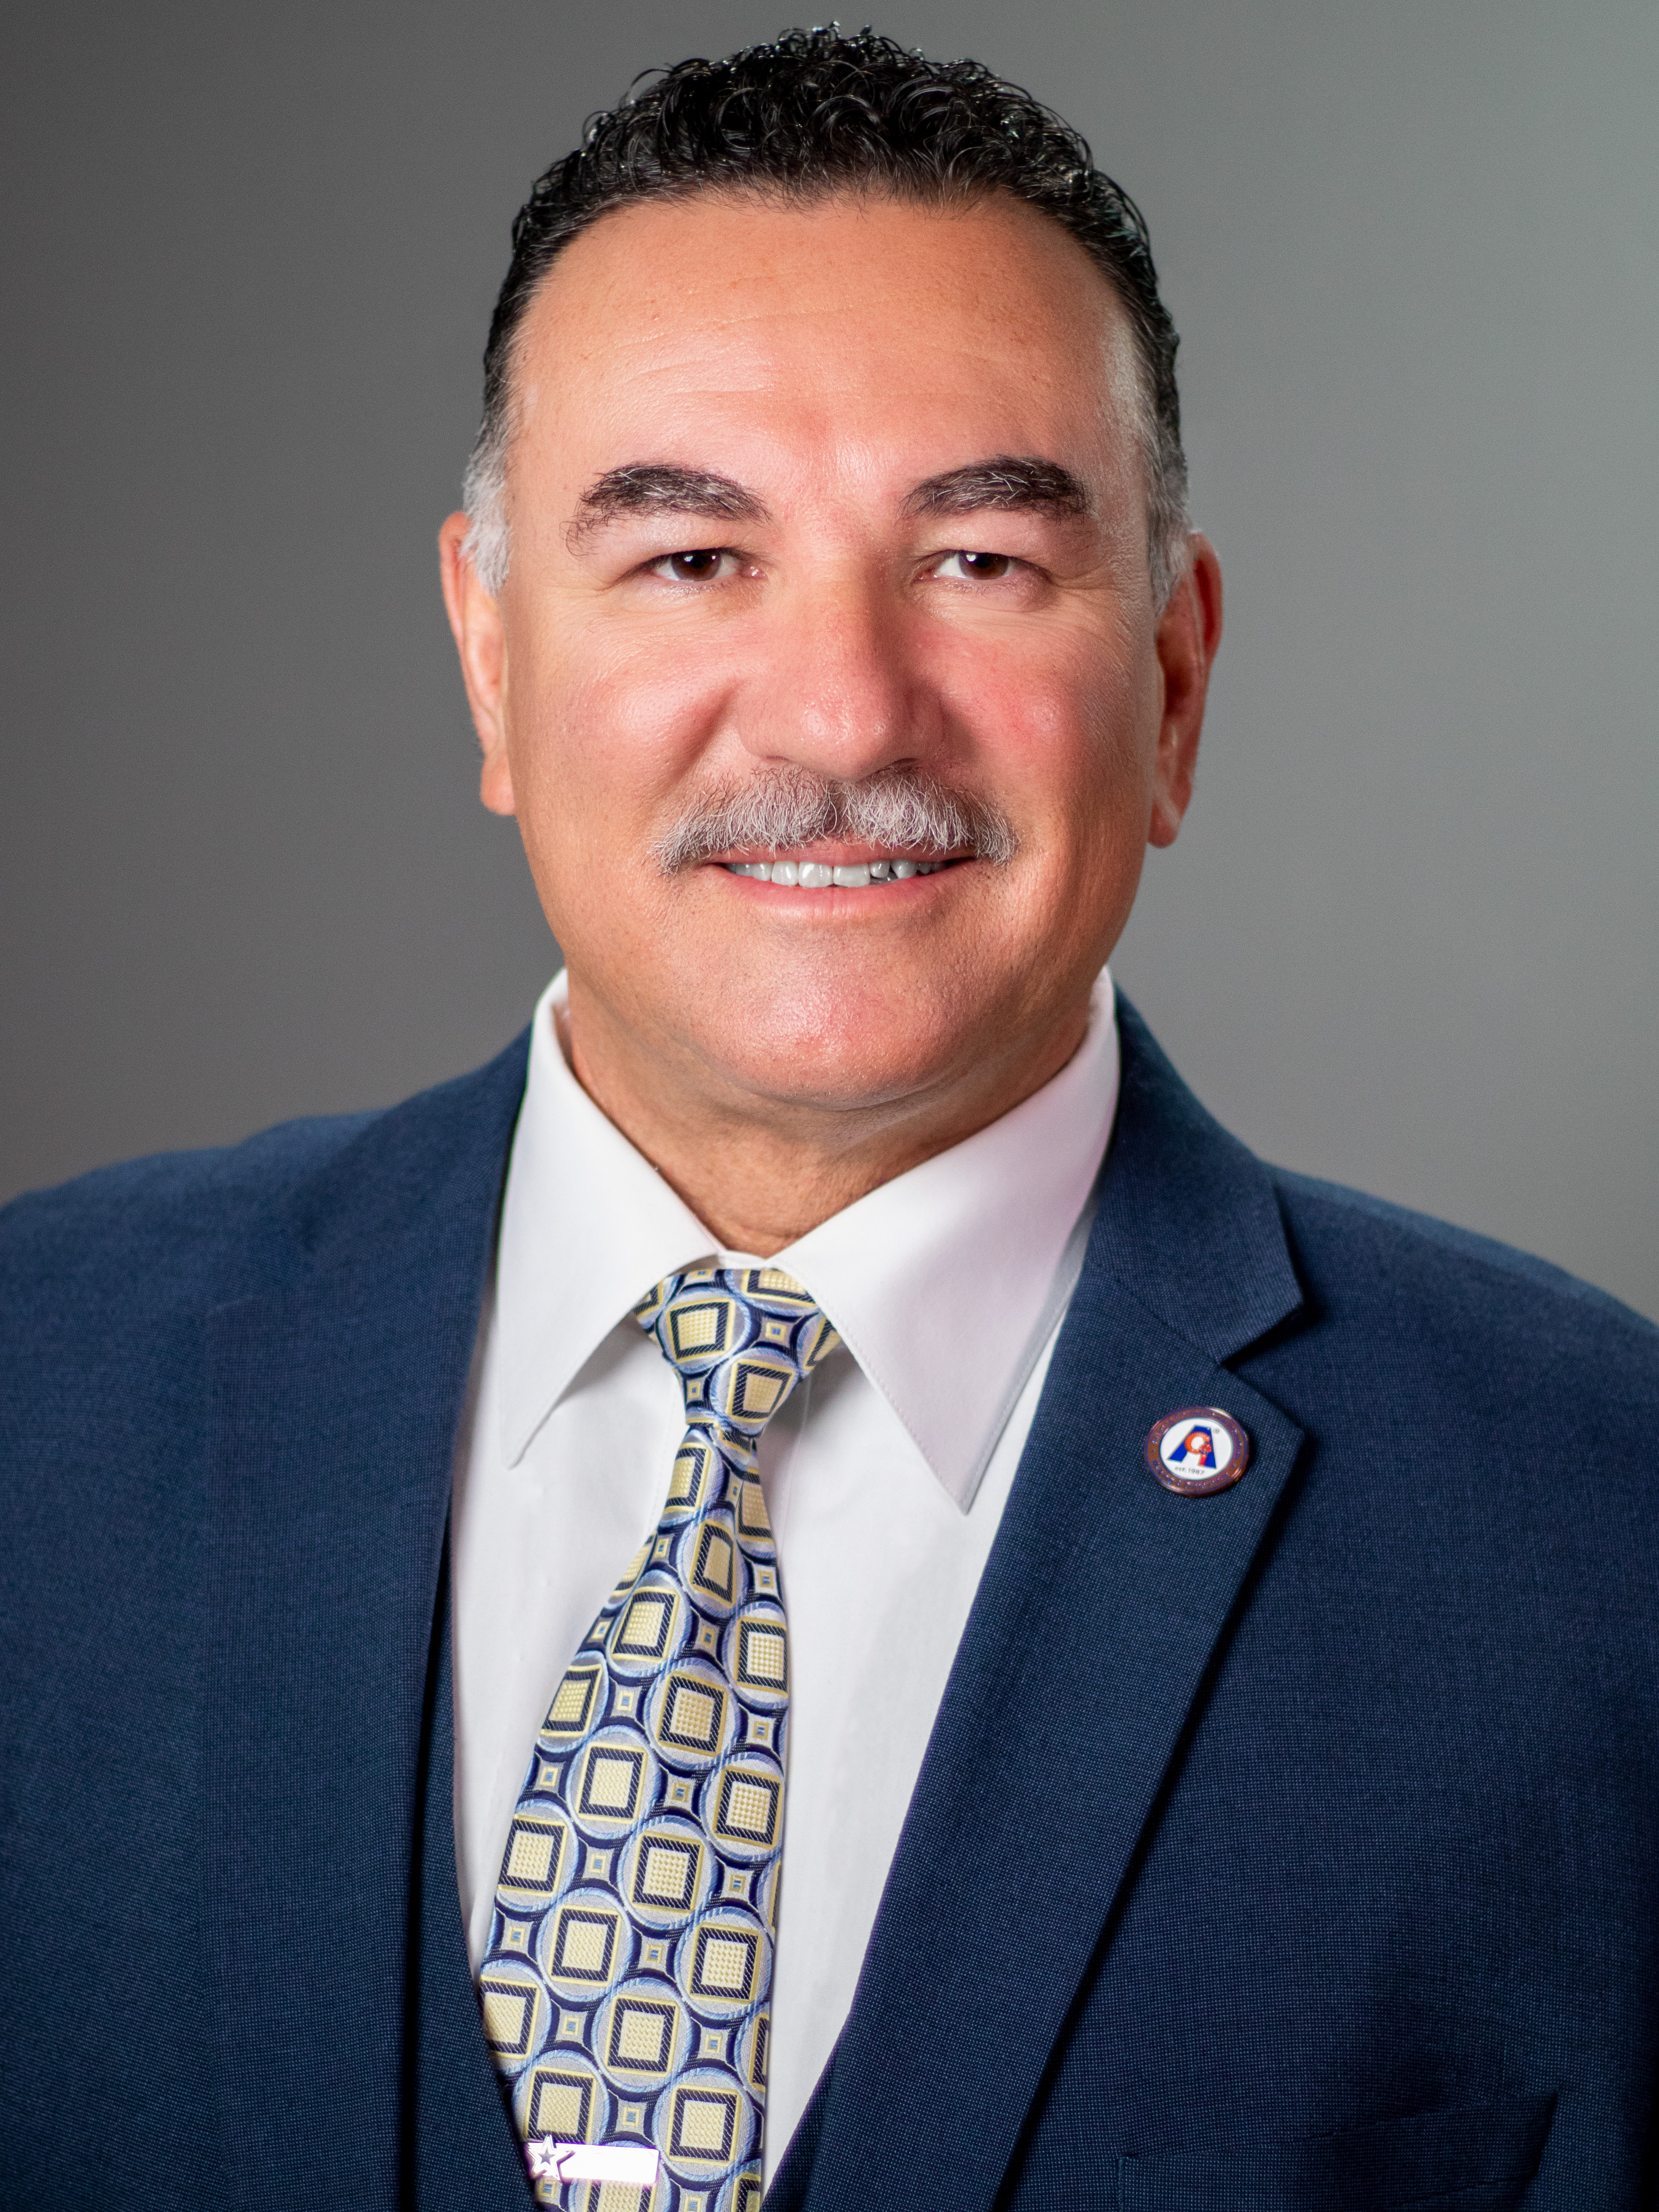 Mario Diaz, CEO of Arizona Correctional Industries